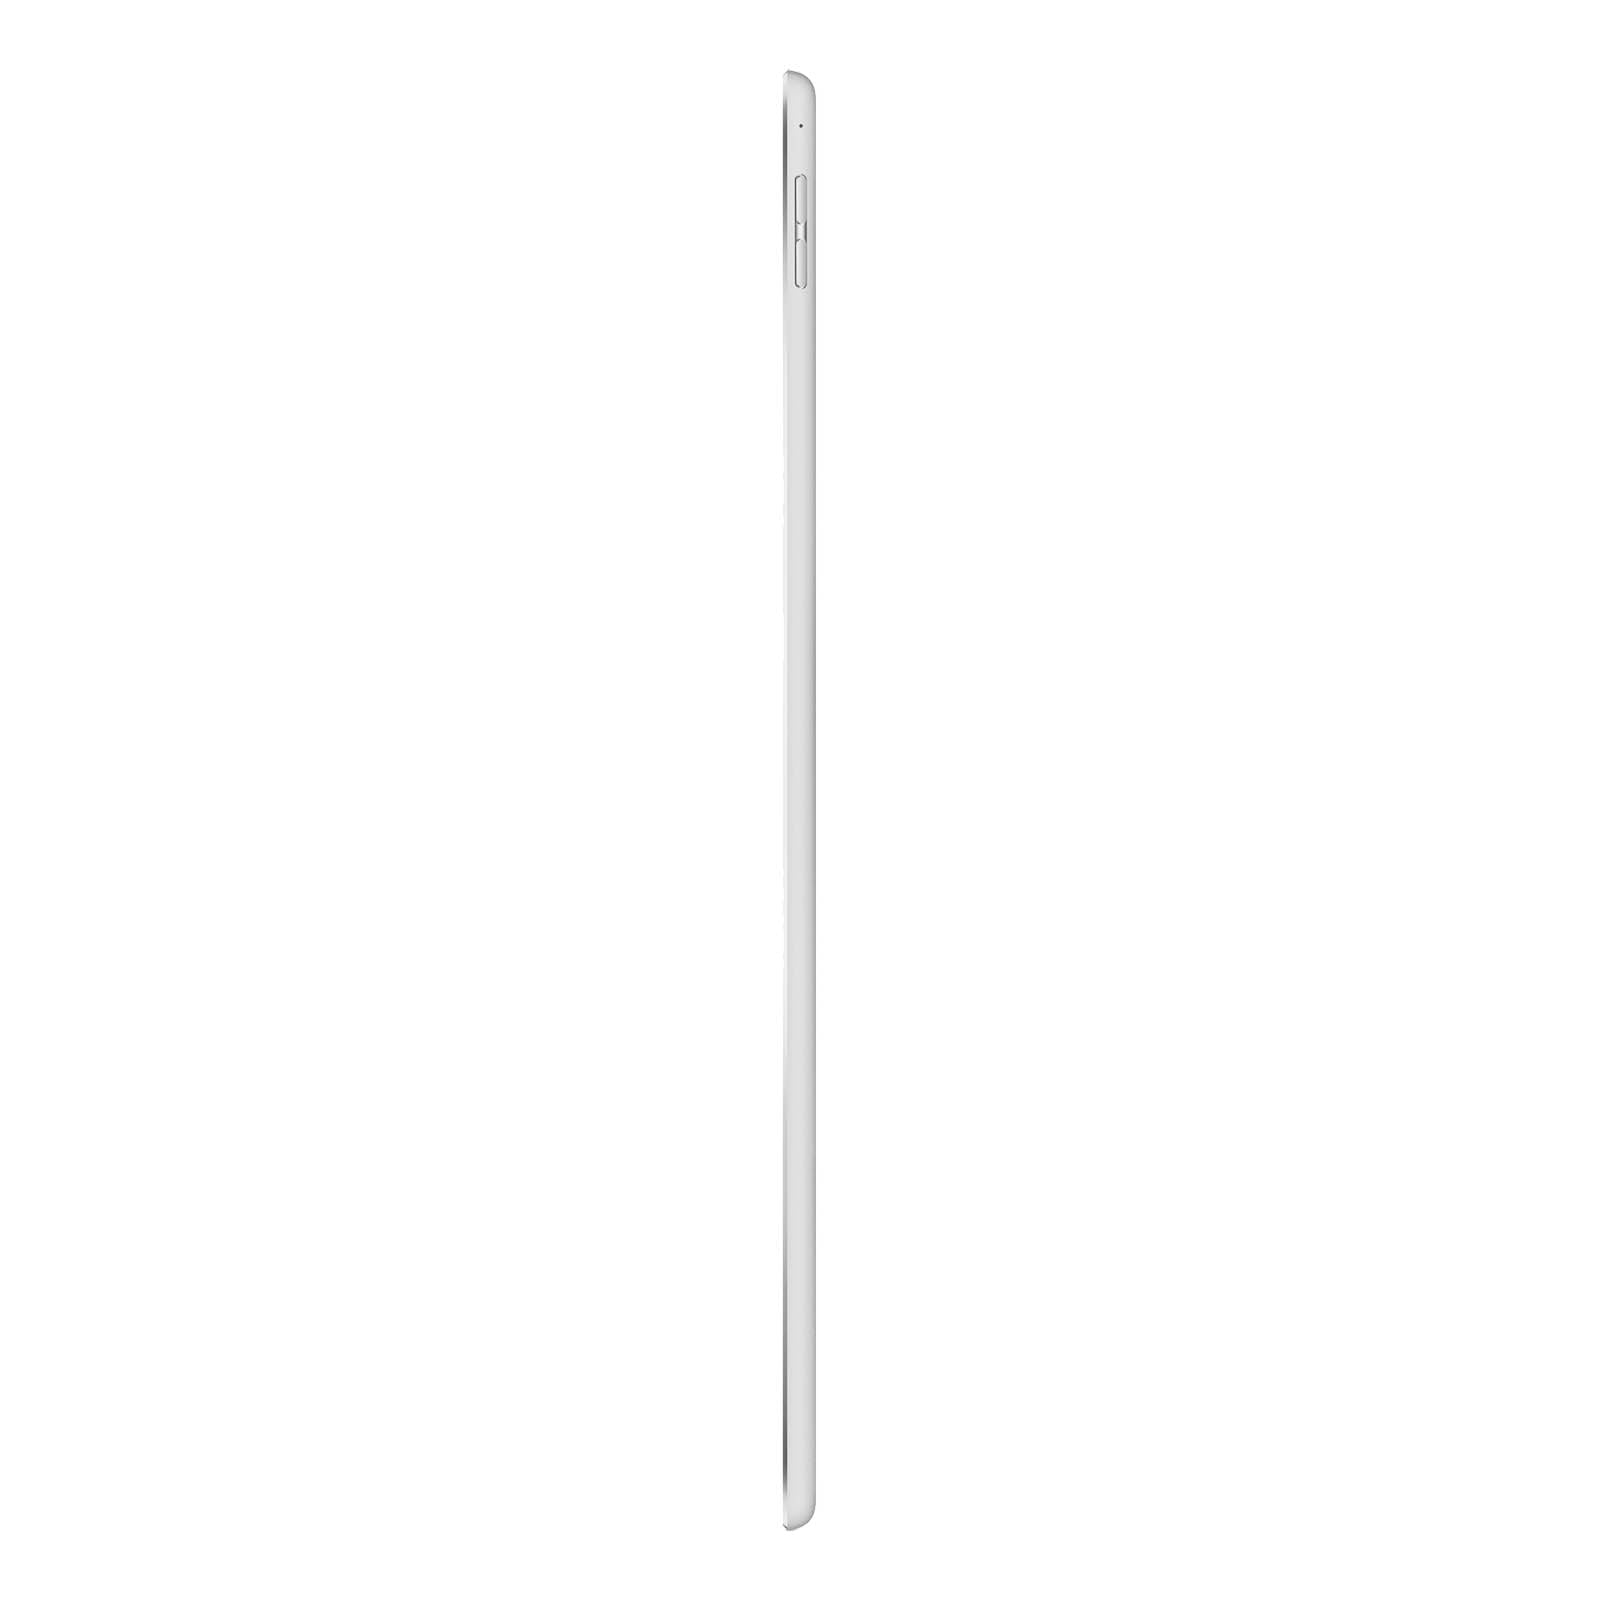 iPad Pro 12.9 Inch 3rd Gen 512GB Silver Very Good - WiFi